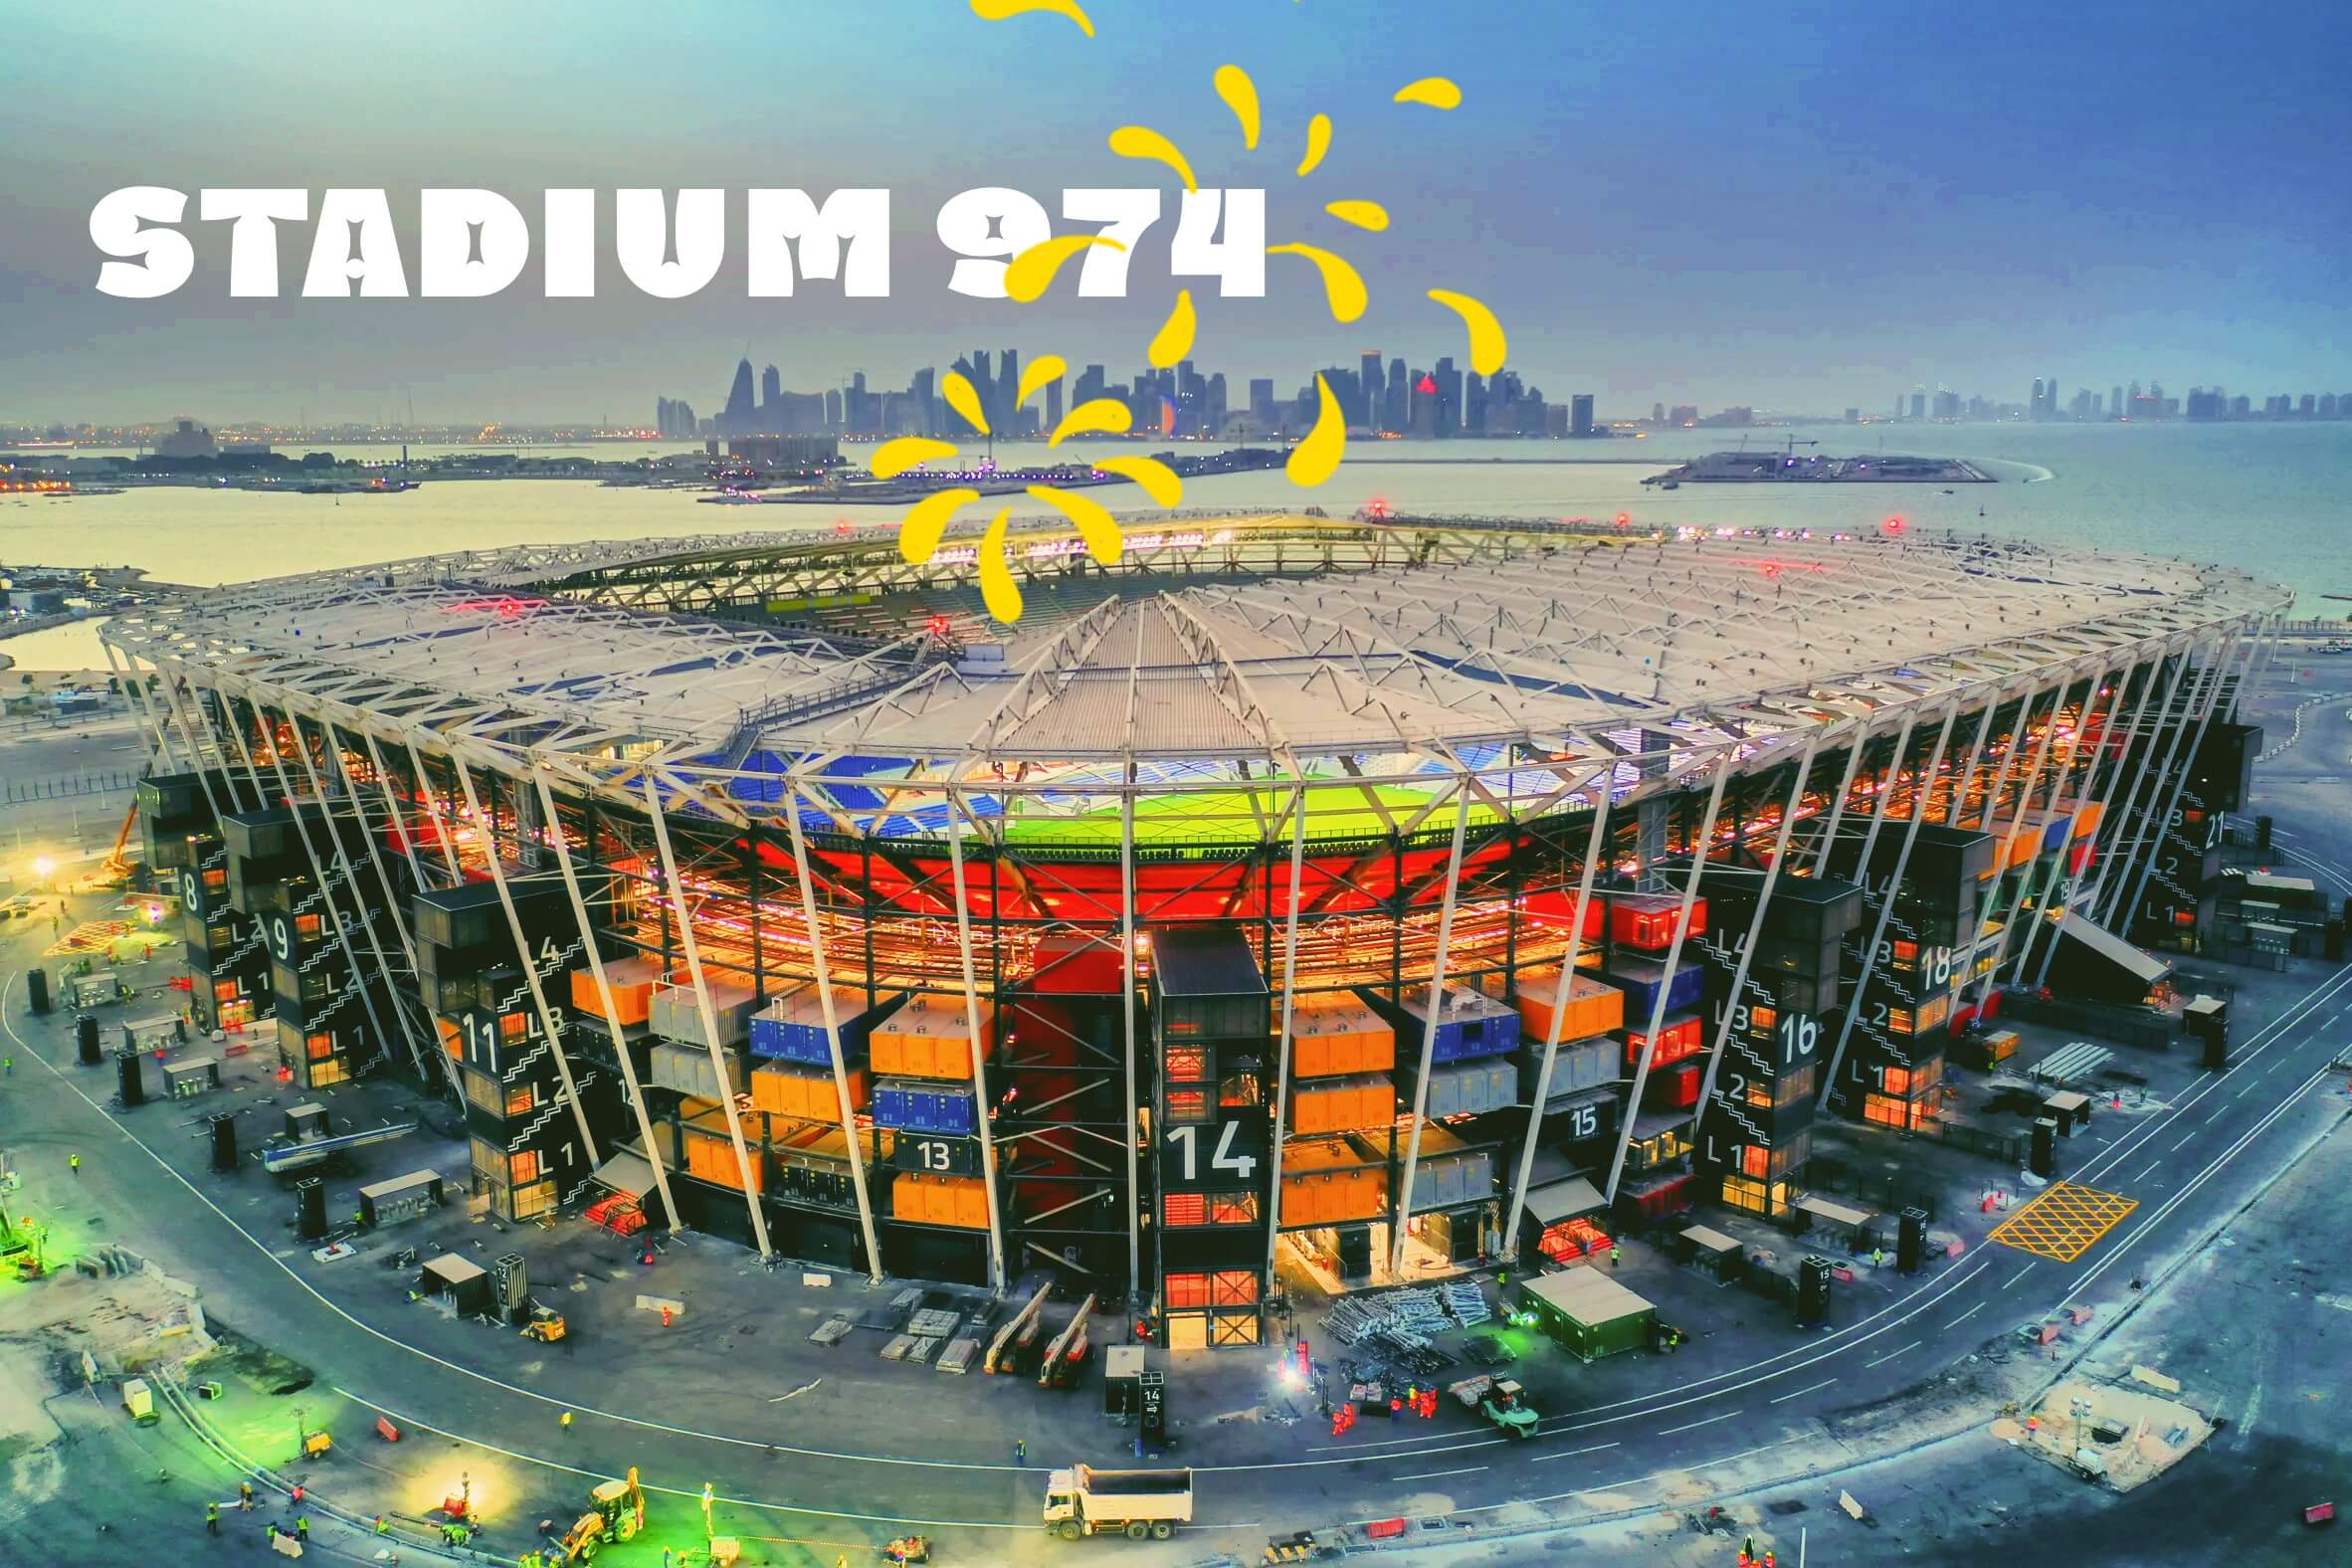 FIFA World Cup 2022 venue:Stadium 974